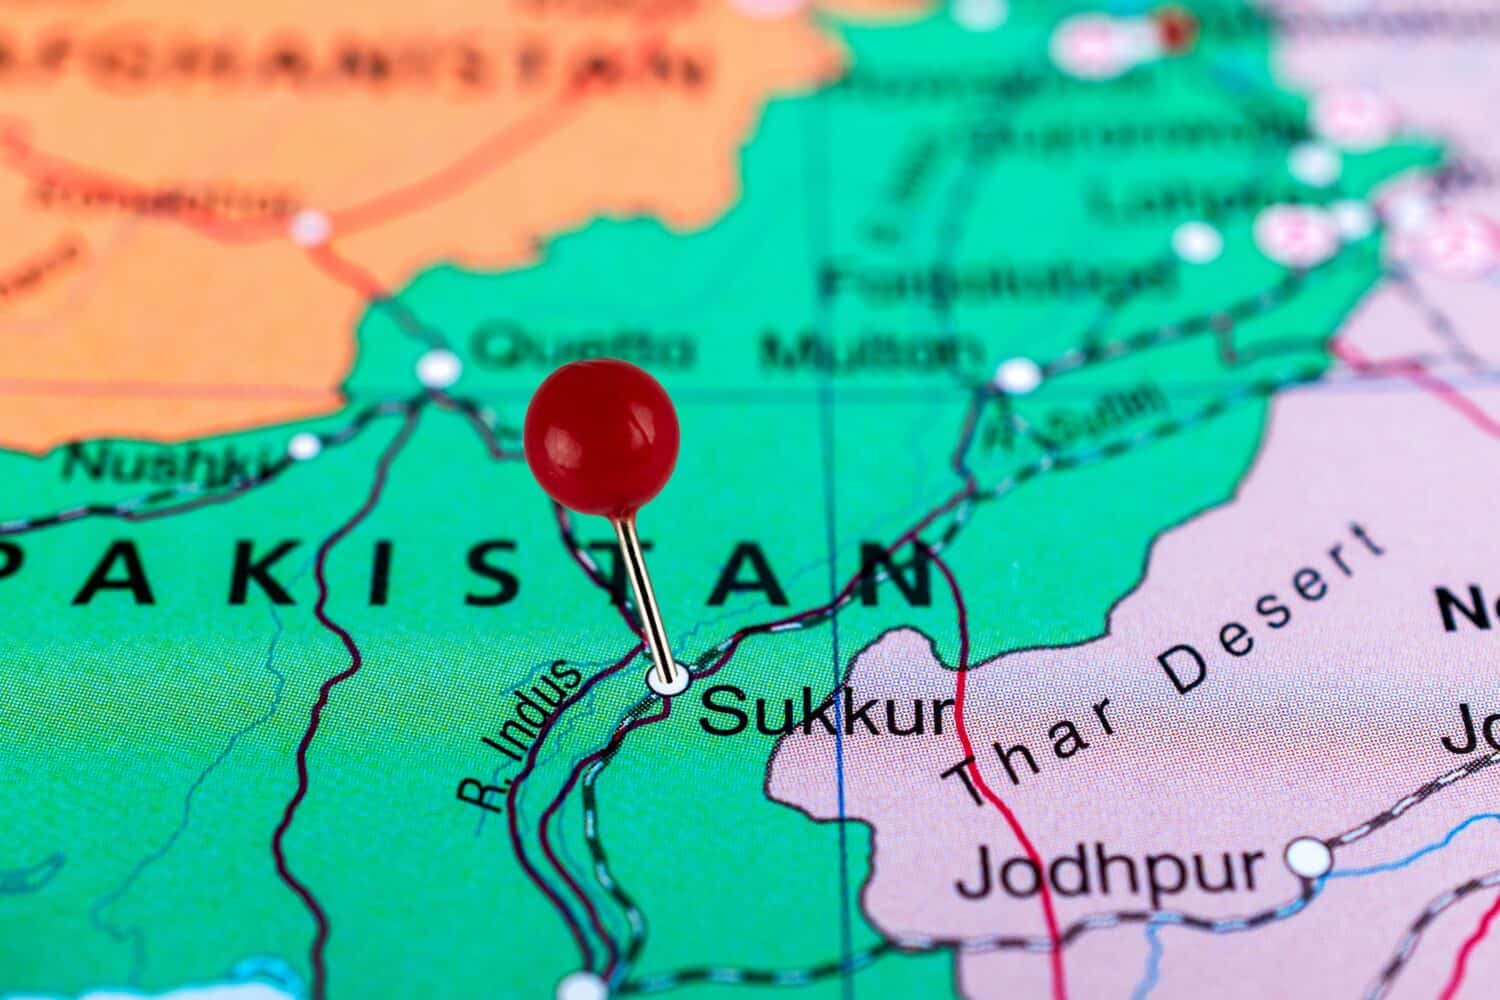 Sukkur pin map. Close up of Sukkur map with red pin. Map with red pin point of Sukkur in Pakistan.